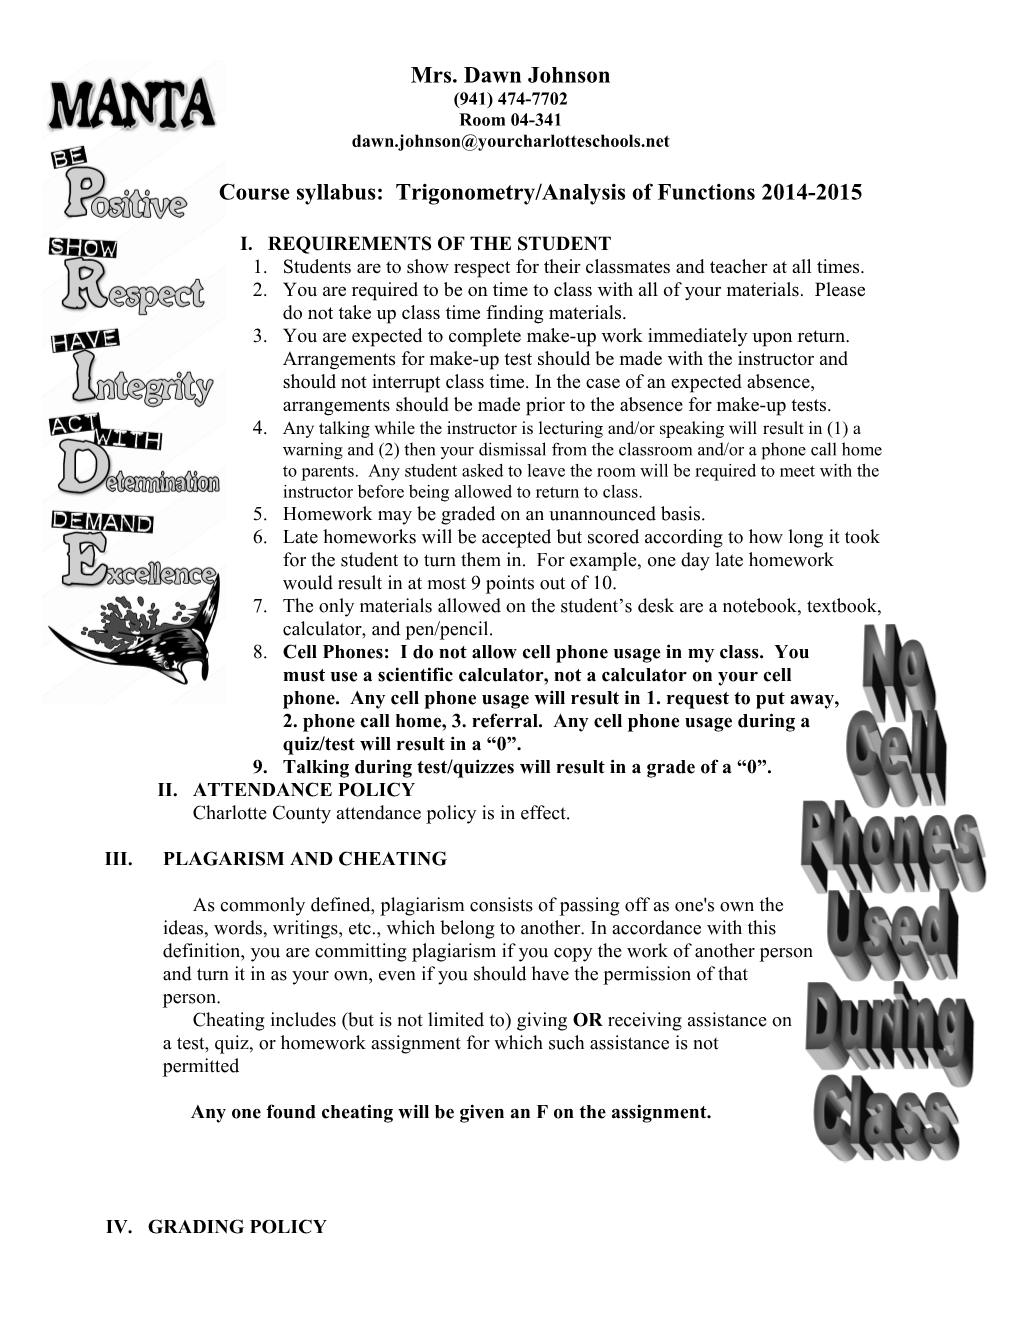 Course Syllabus: Trigonometry/Analysis of Functions 2014-2015